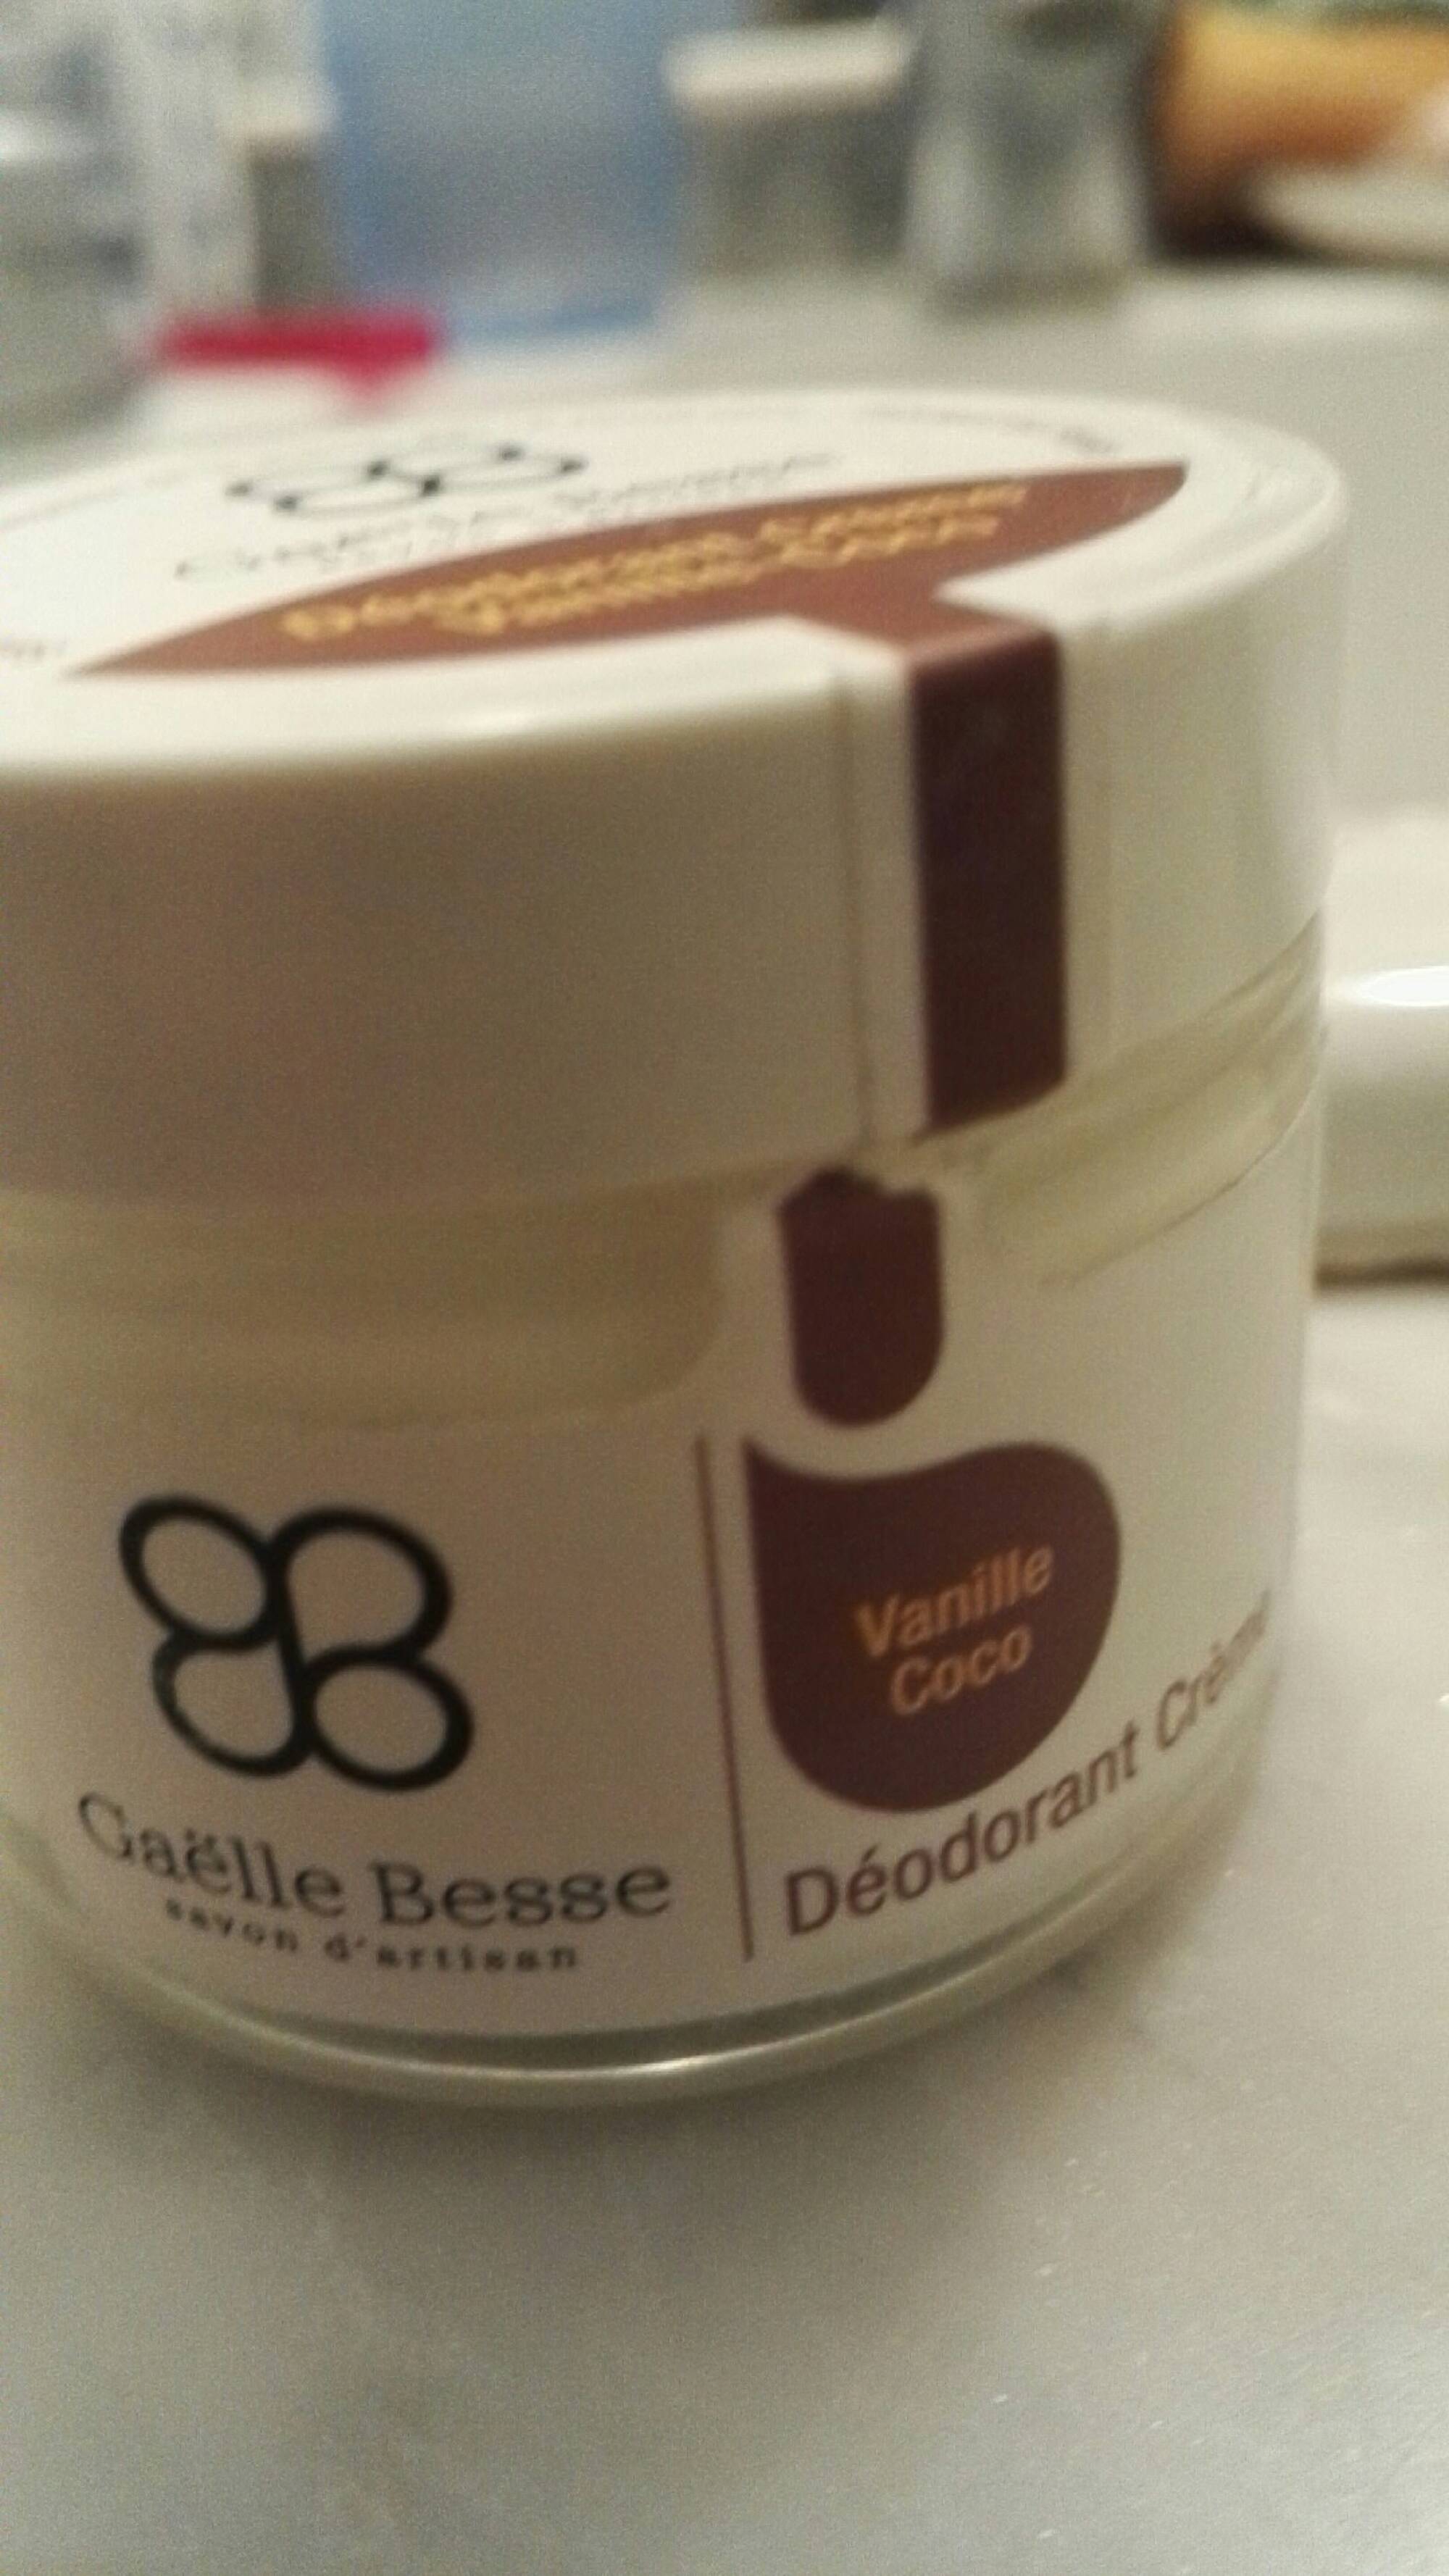 GAËLLE BESSE - Vanille Coco - Déodorant crème